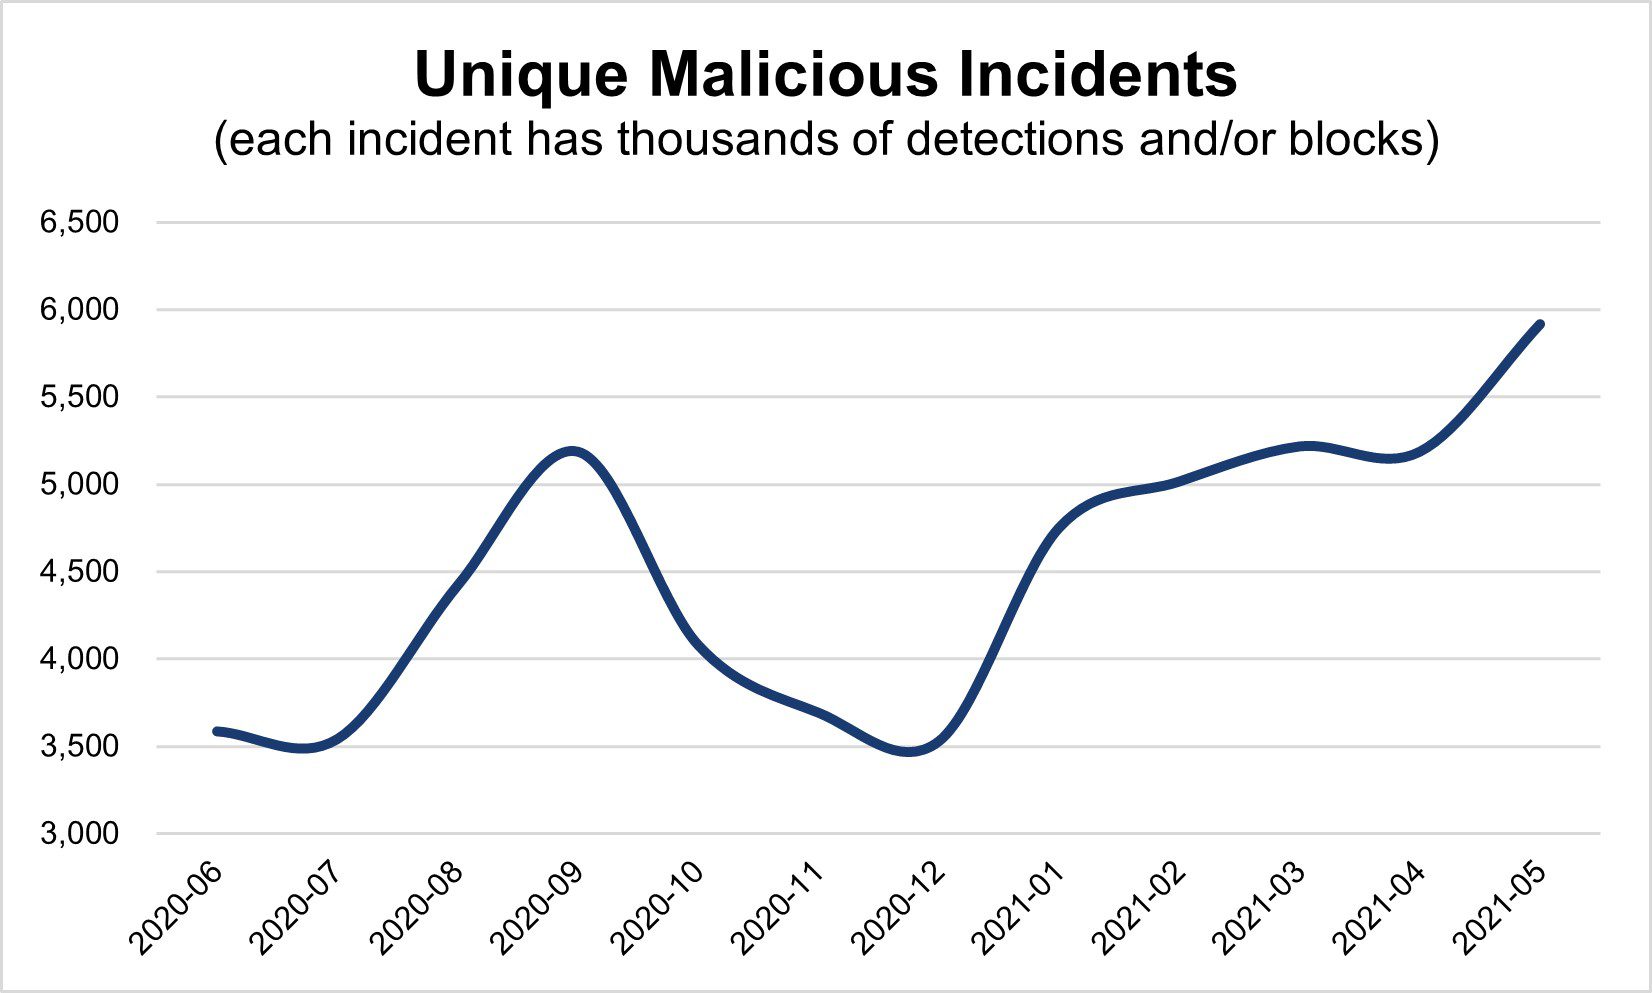 Unique Malicious Incidents